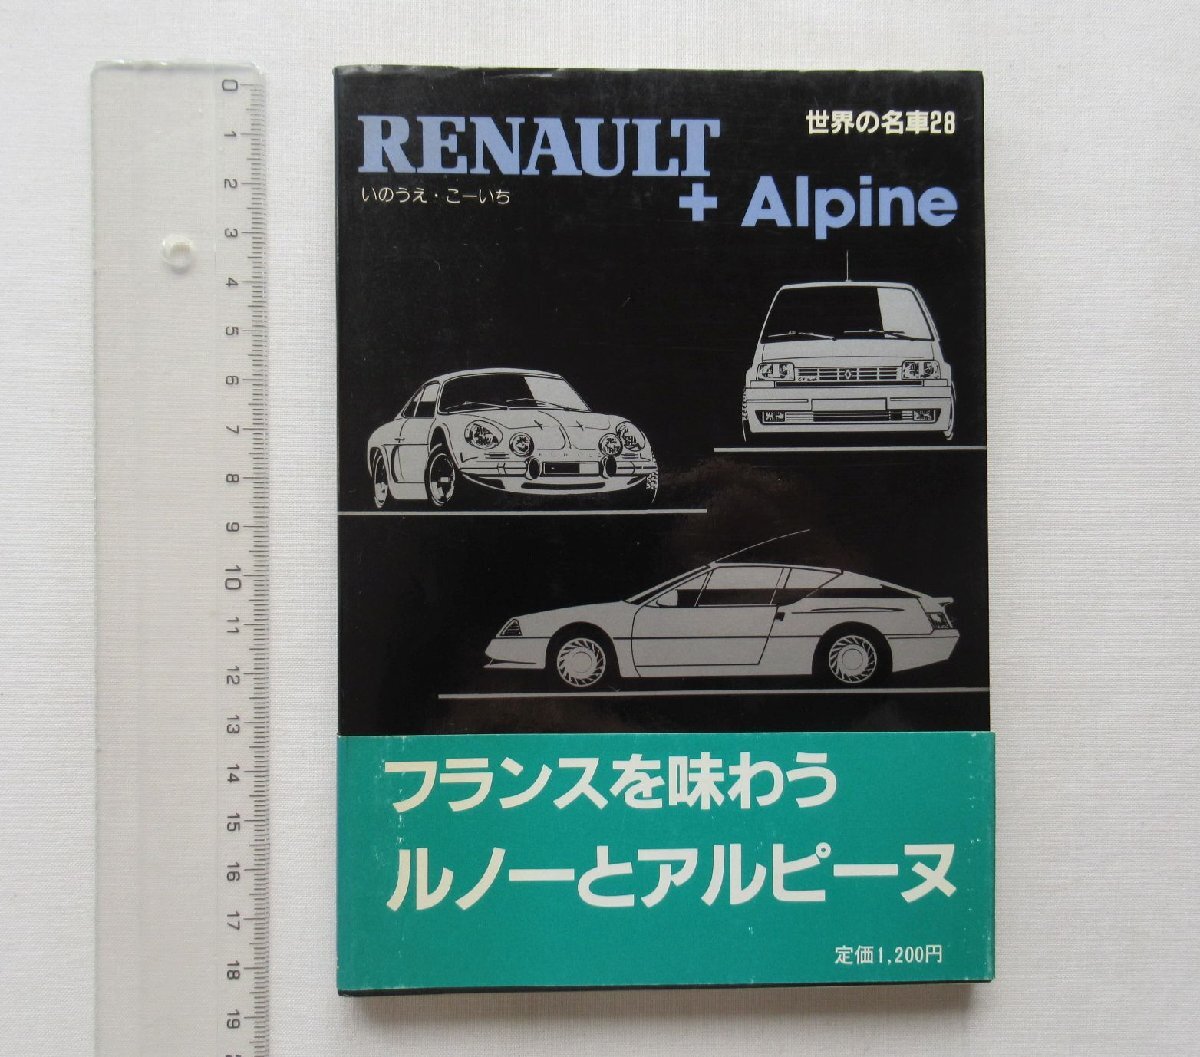 ★[A60305・RENAULT + Alpine ] 世界の名車 28。昭和62年年10月25日発行。帯付き。★_画像1